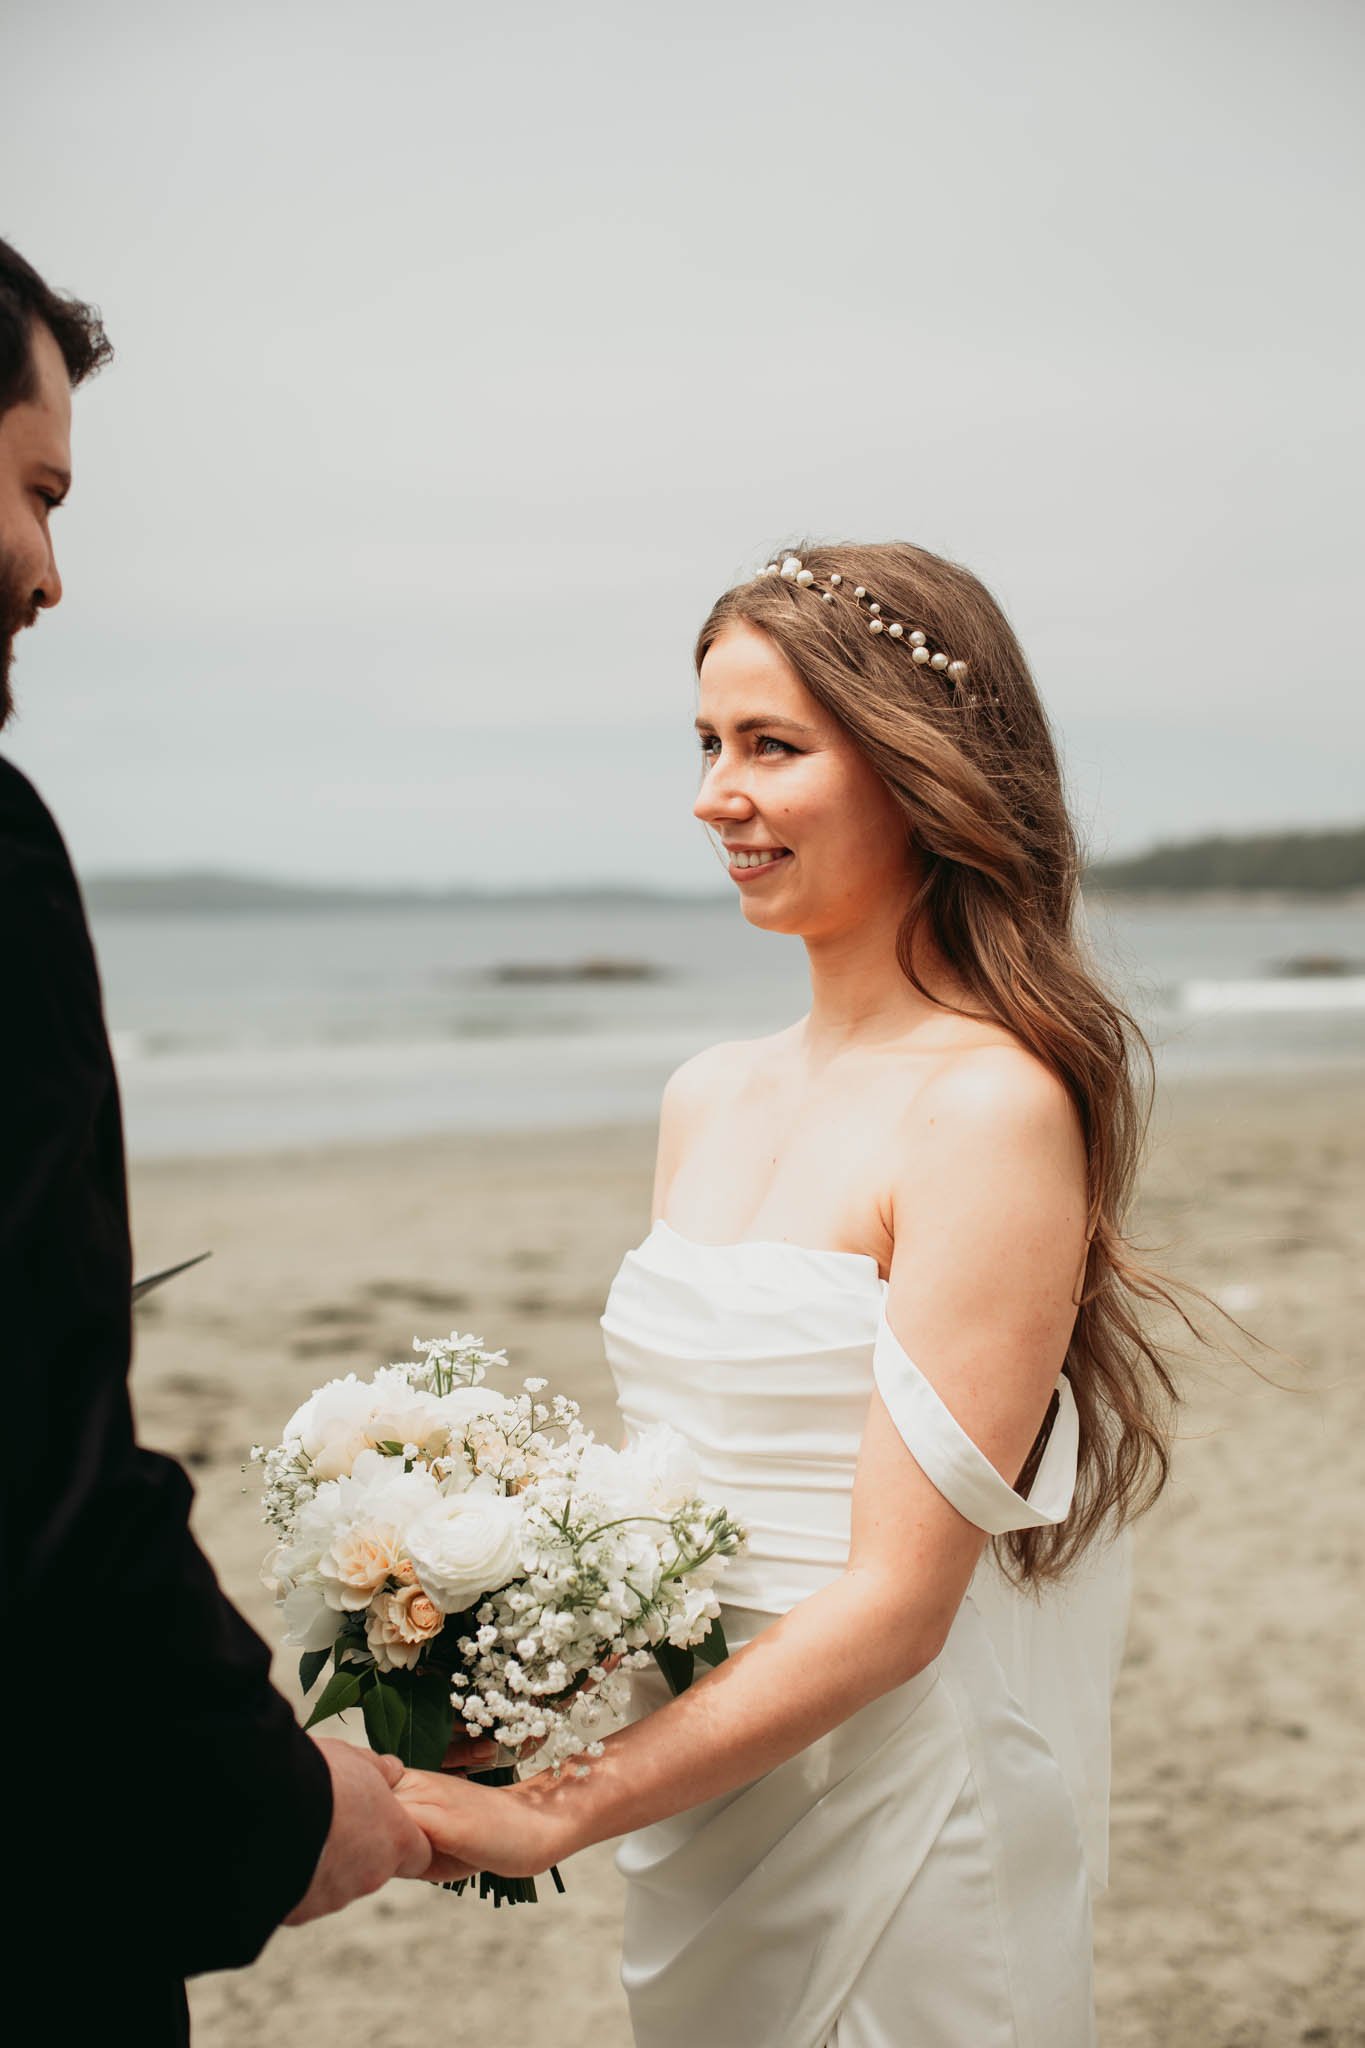 Kayla Kieran elopement - Tofino Vancouver Island British Columbia - Elyse Anna Photography-0445.jpg